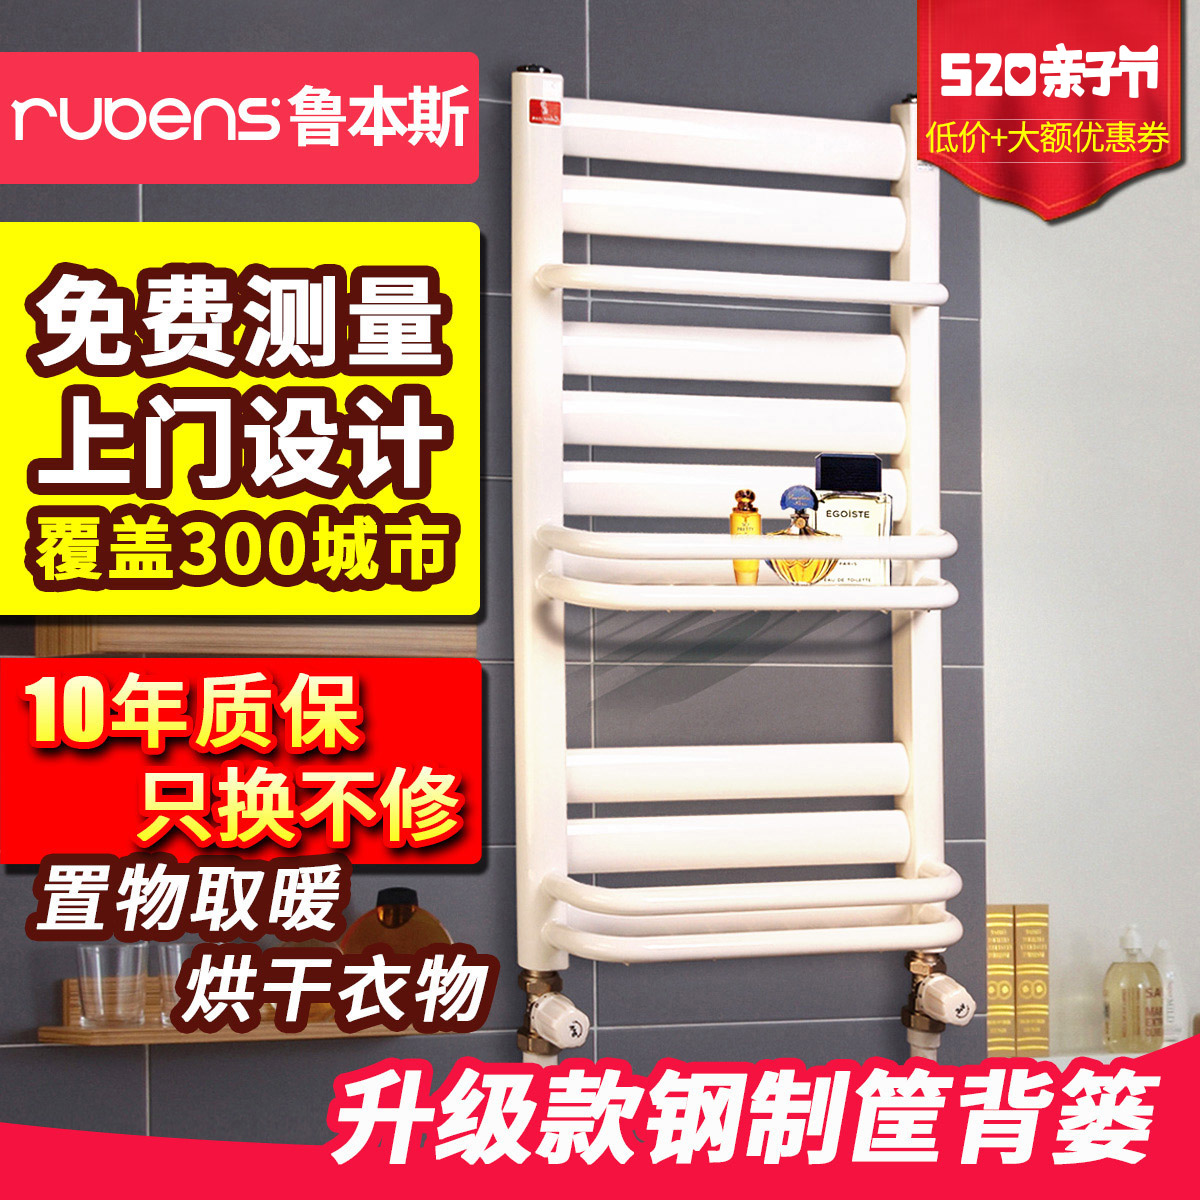 Rubens Steel Small Backbasket Heating Plate Household Heating Radiator Heat Exchanger Central Heating Decorative Toilet